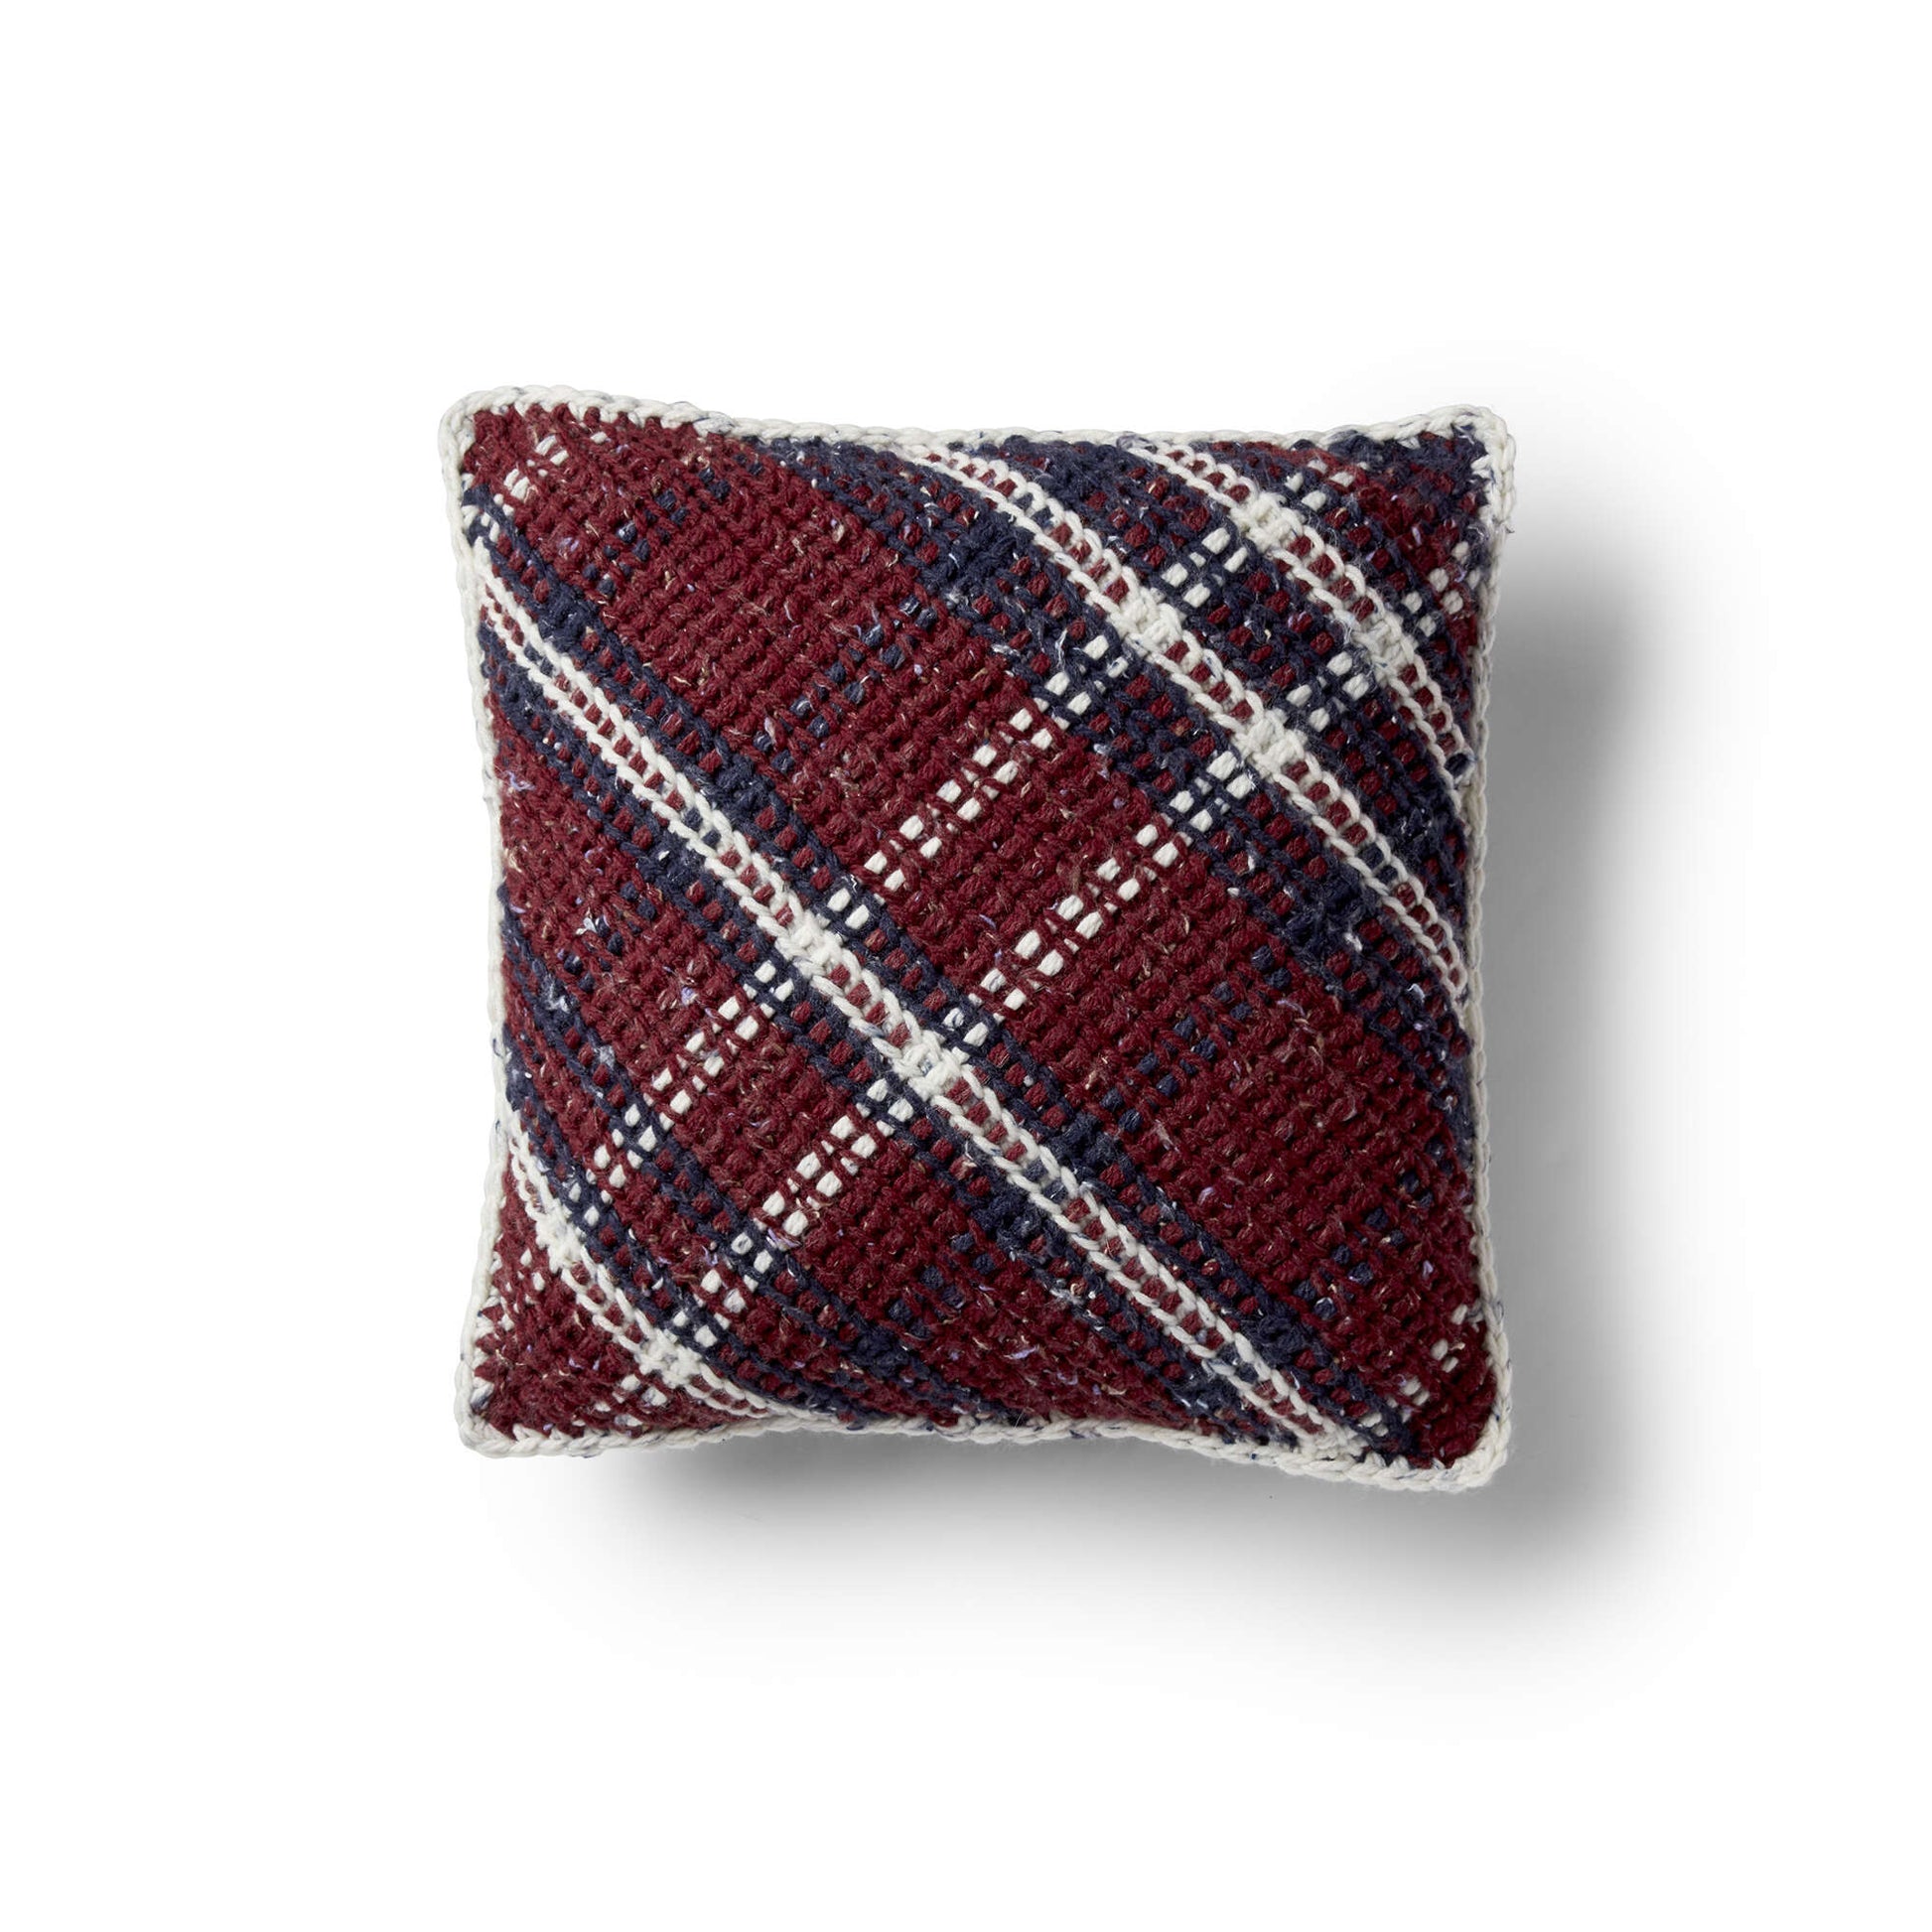 Free Bernat Argyle Plaid Crochet Pillow Pattern